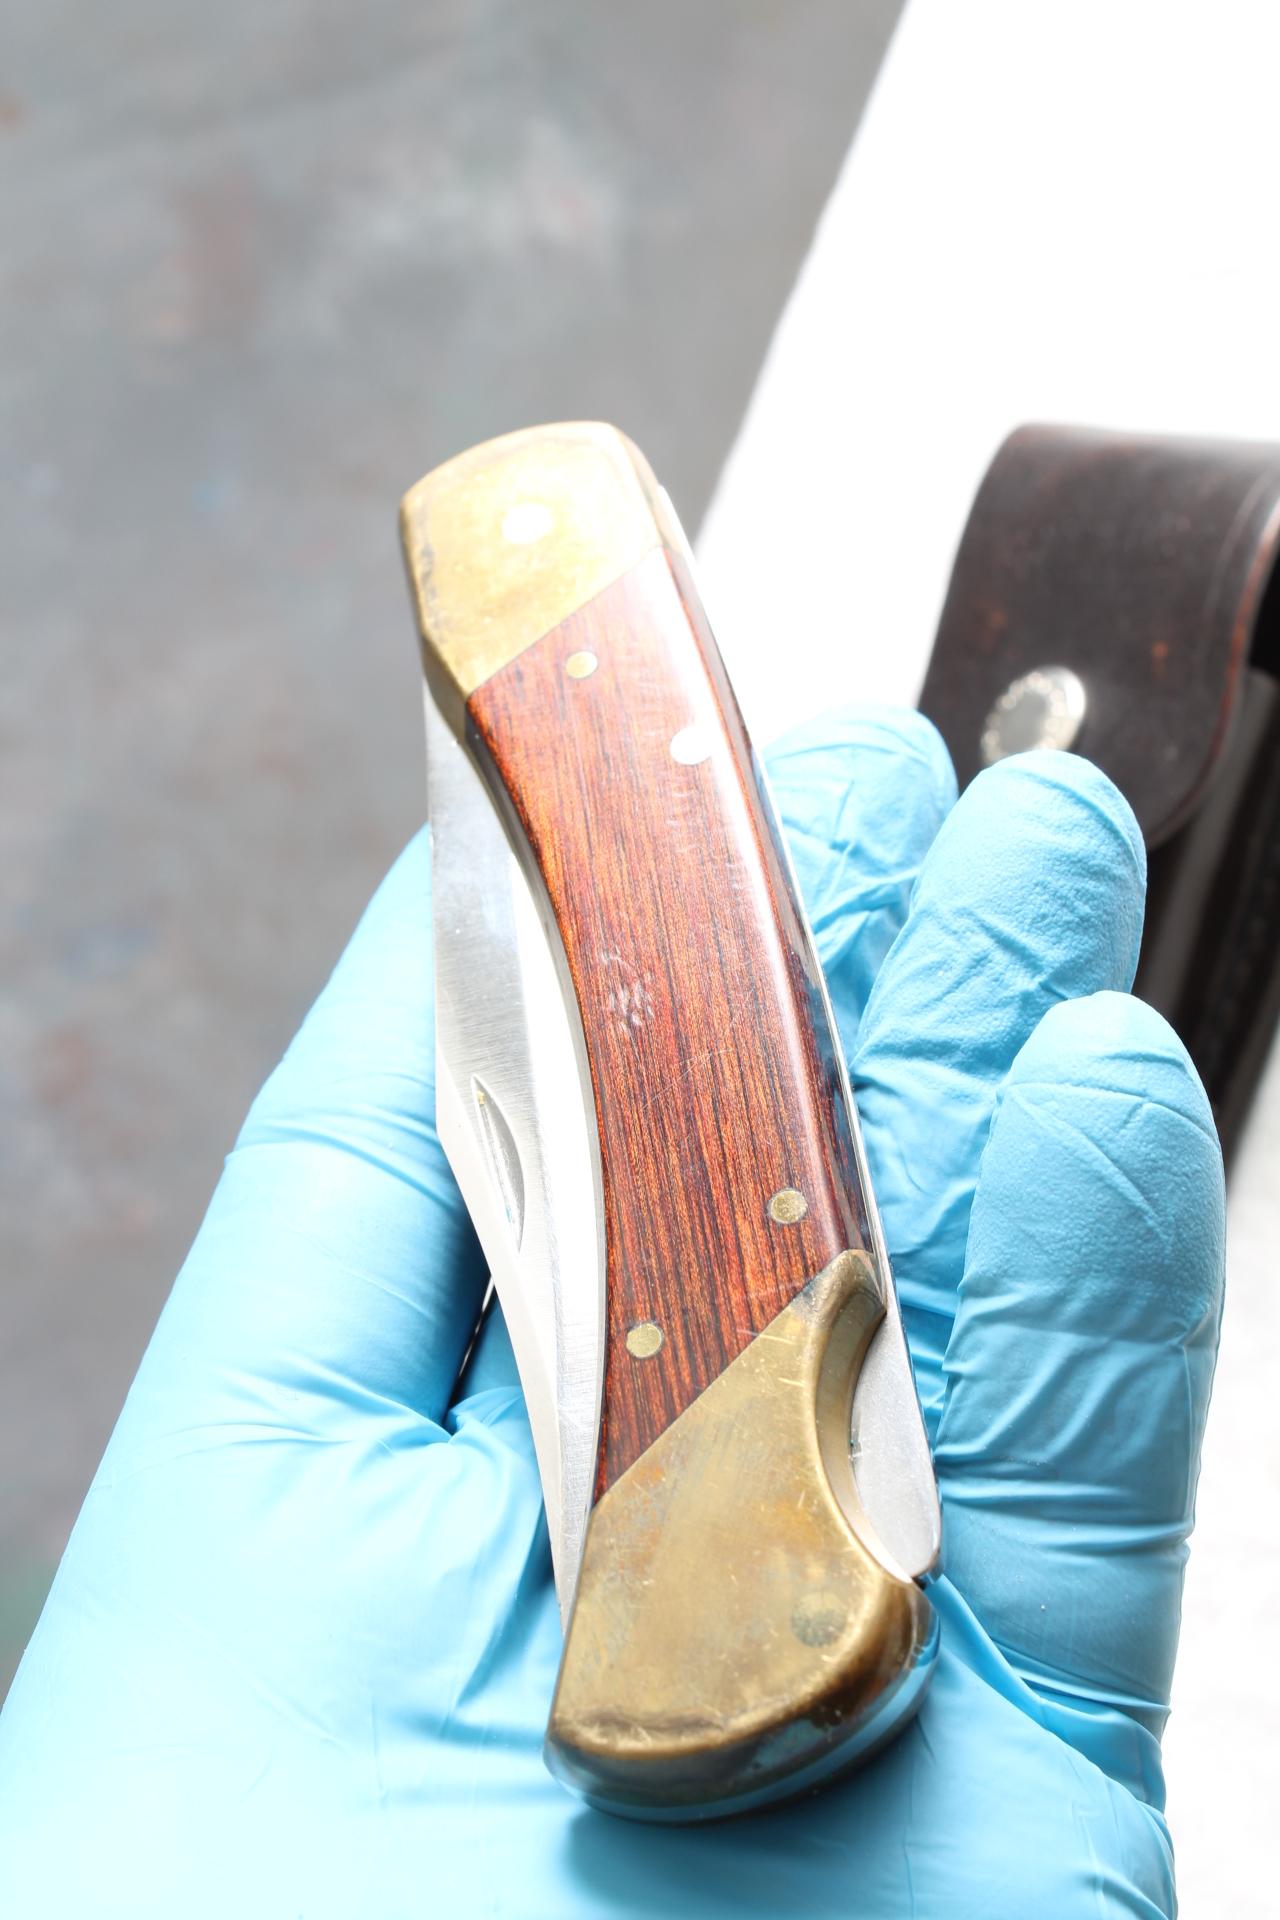 Vintage SCHRADE+ USA LB7 Folding Knife Brass & Wood Handle Leather Sheath